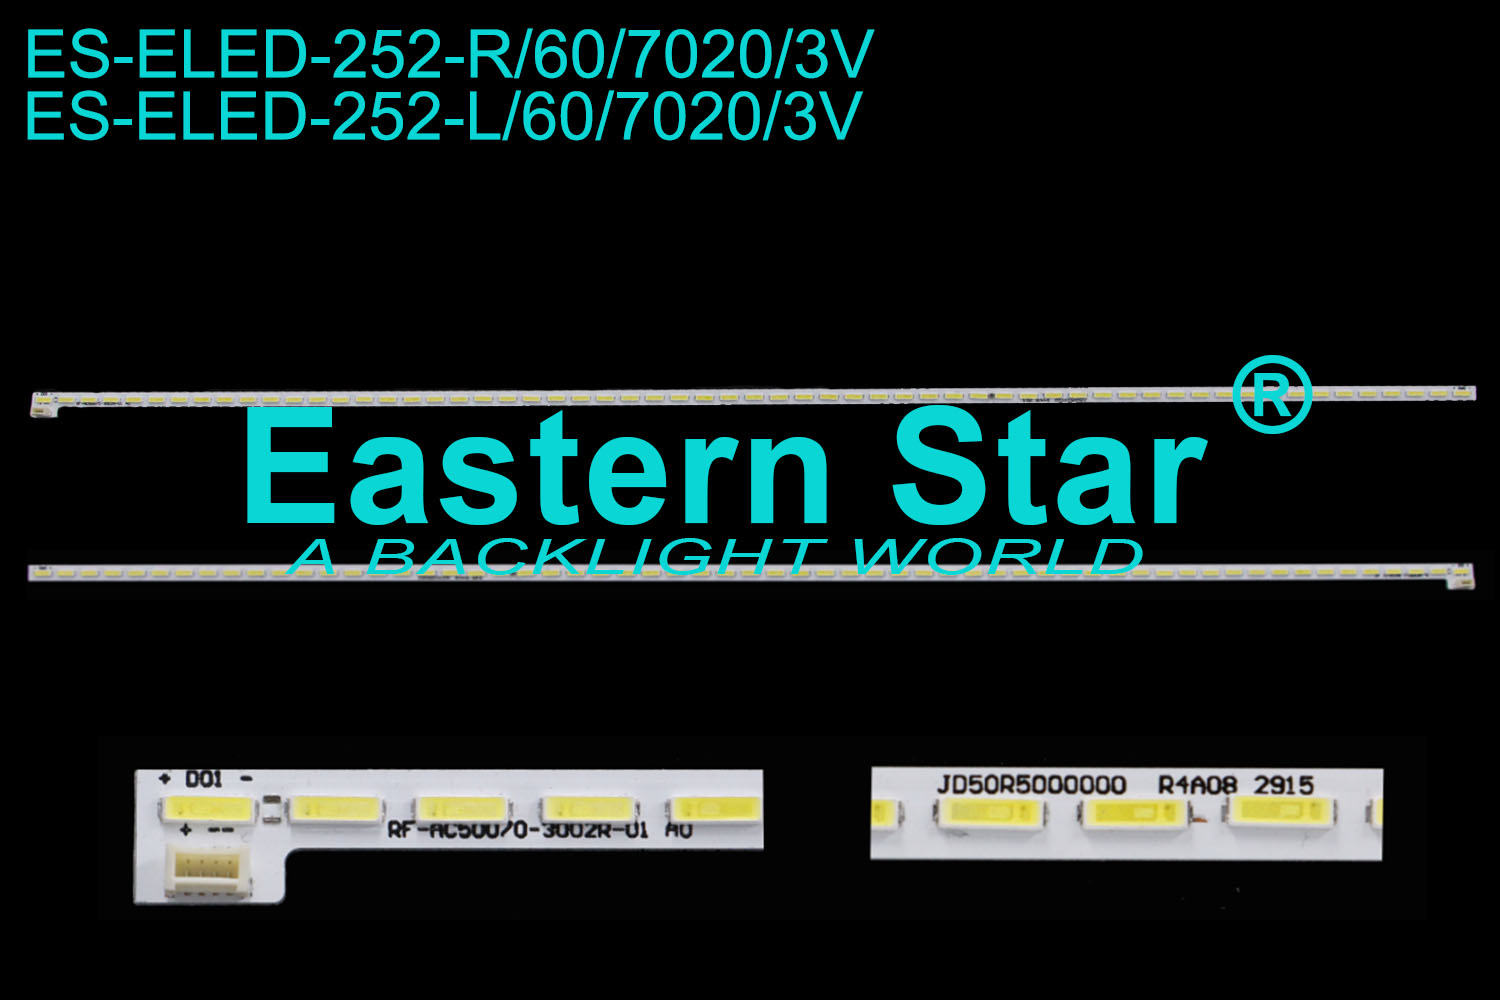 ES-ELED-252 ELED/EDGE TV backlight 50'' 60LEDs use for Changhong RF-AC500A70-3002R/3002L-01 LED STRIPS(2)